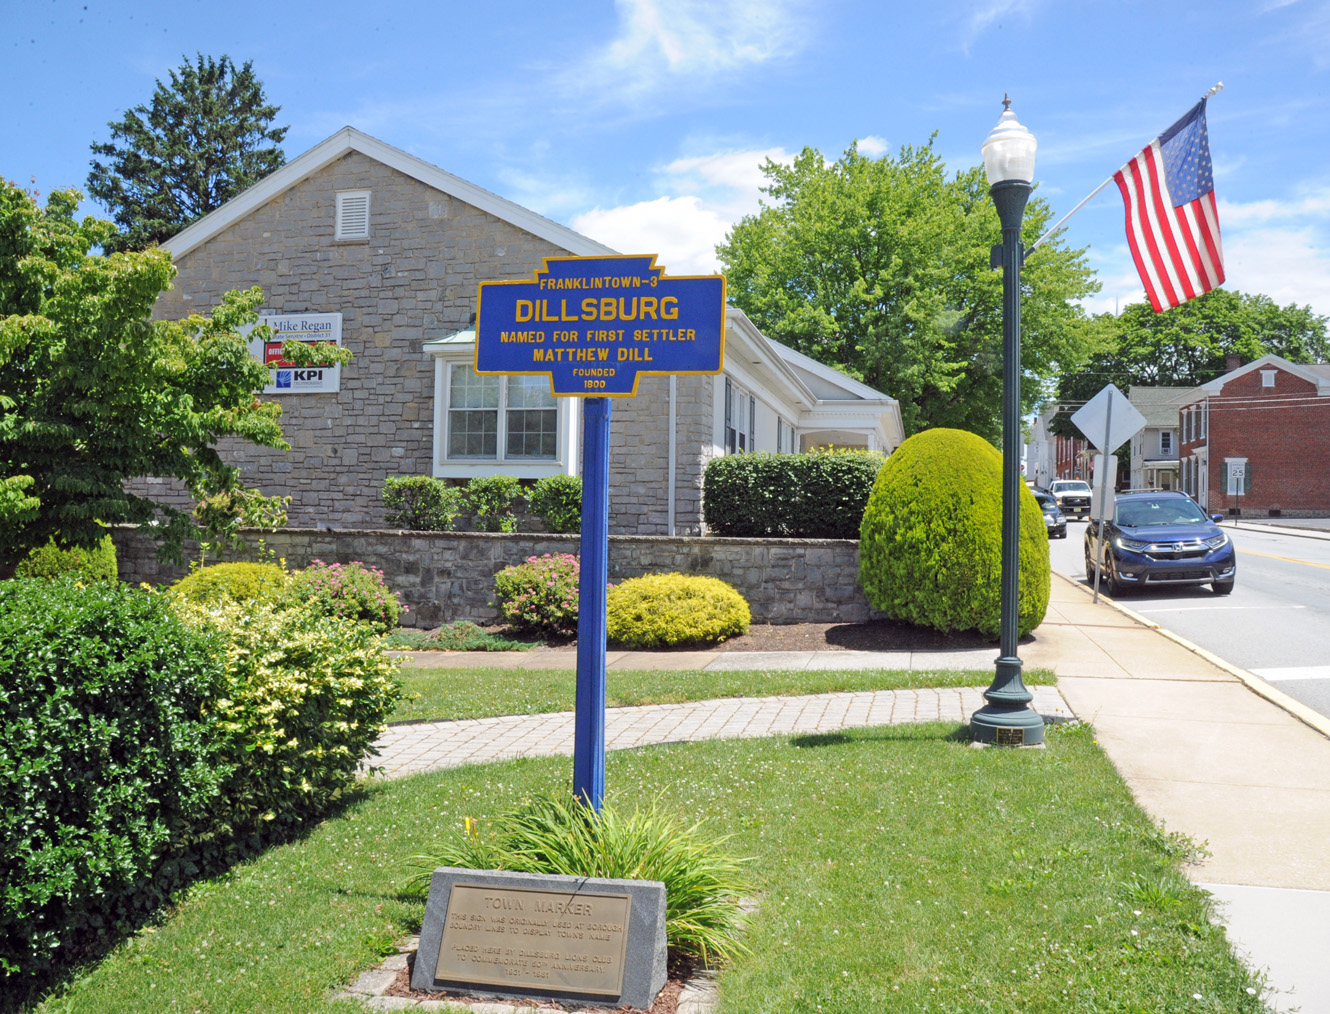 Dillsburg Pennsylvania historical marker